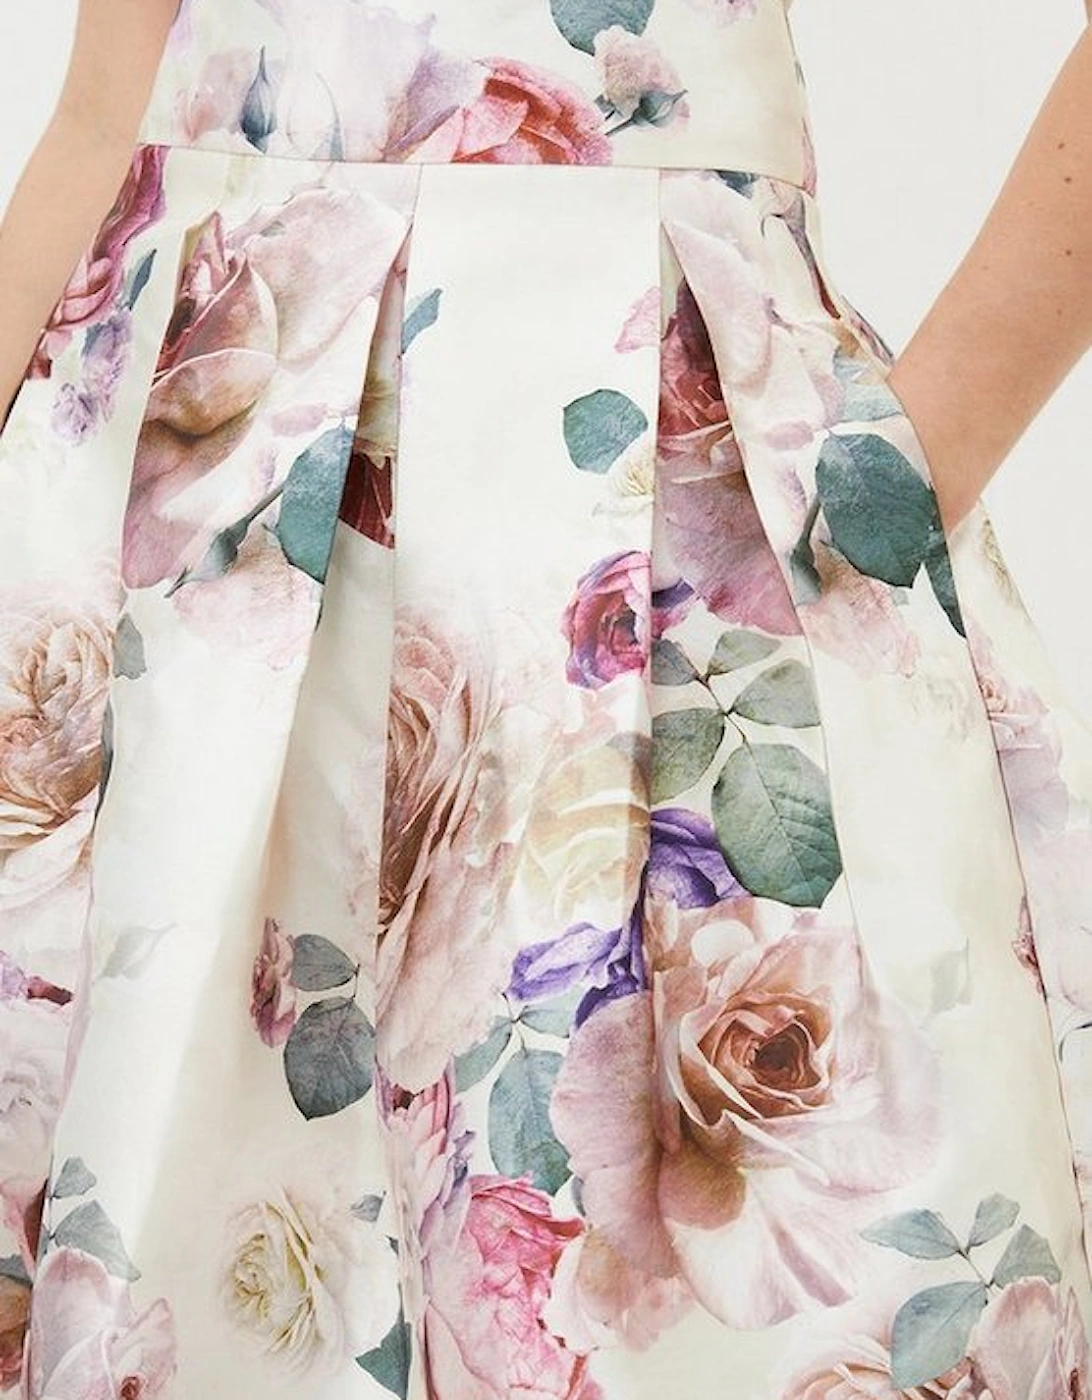 Romantic Floral Print Woven Prom Midi Skirt